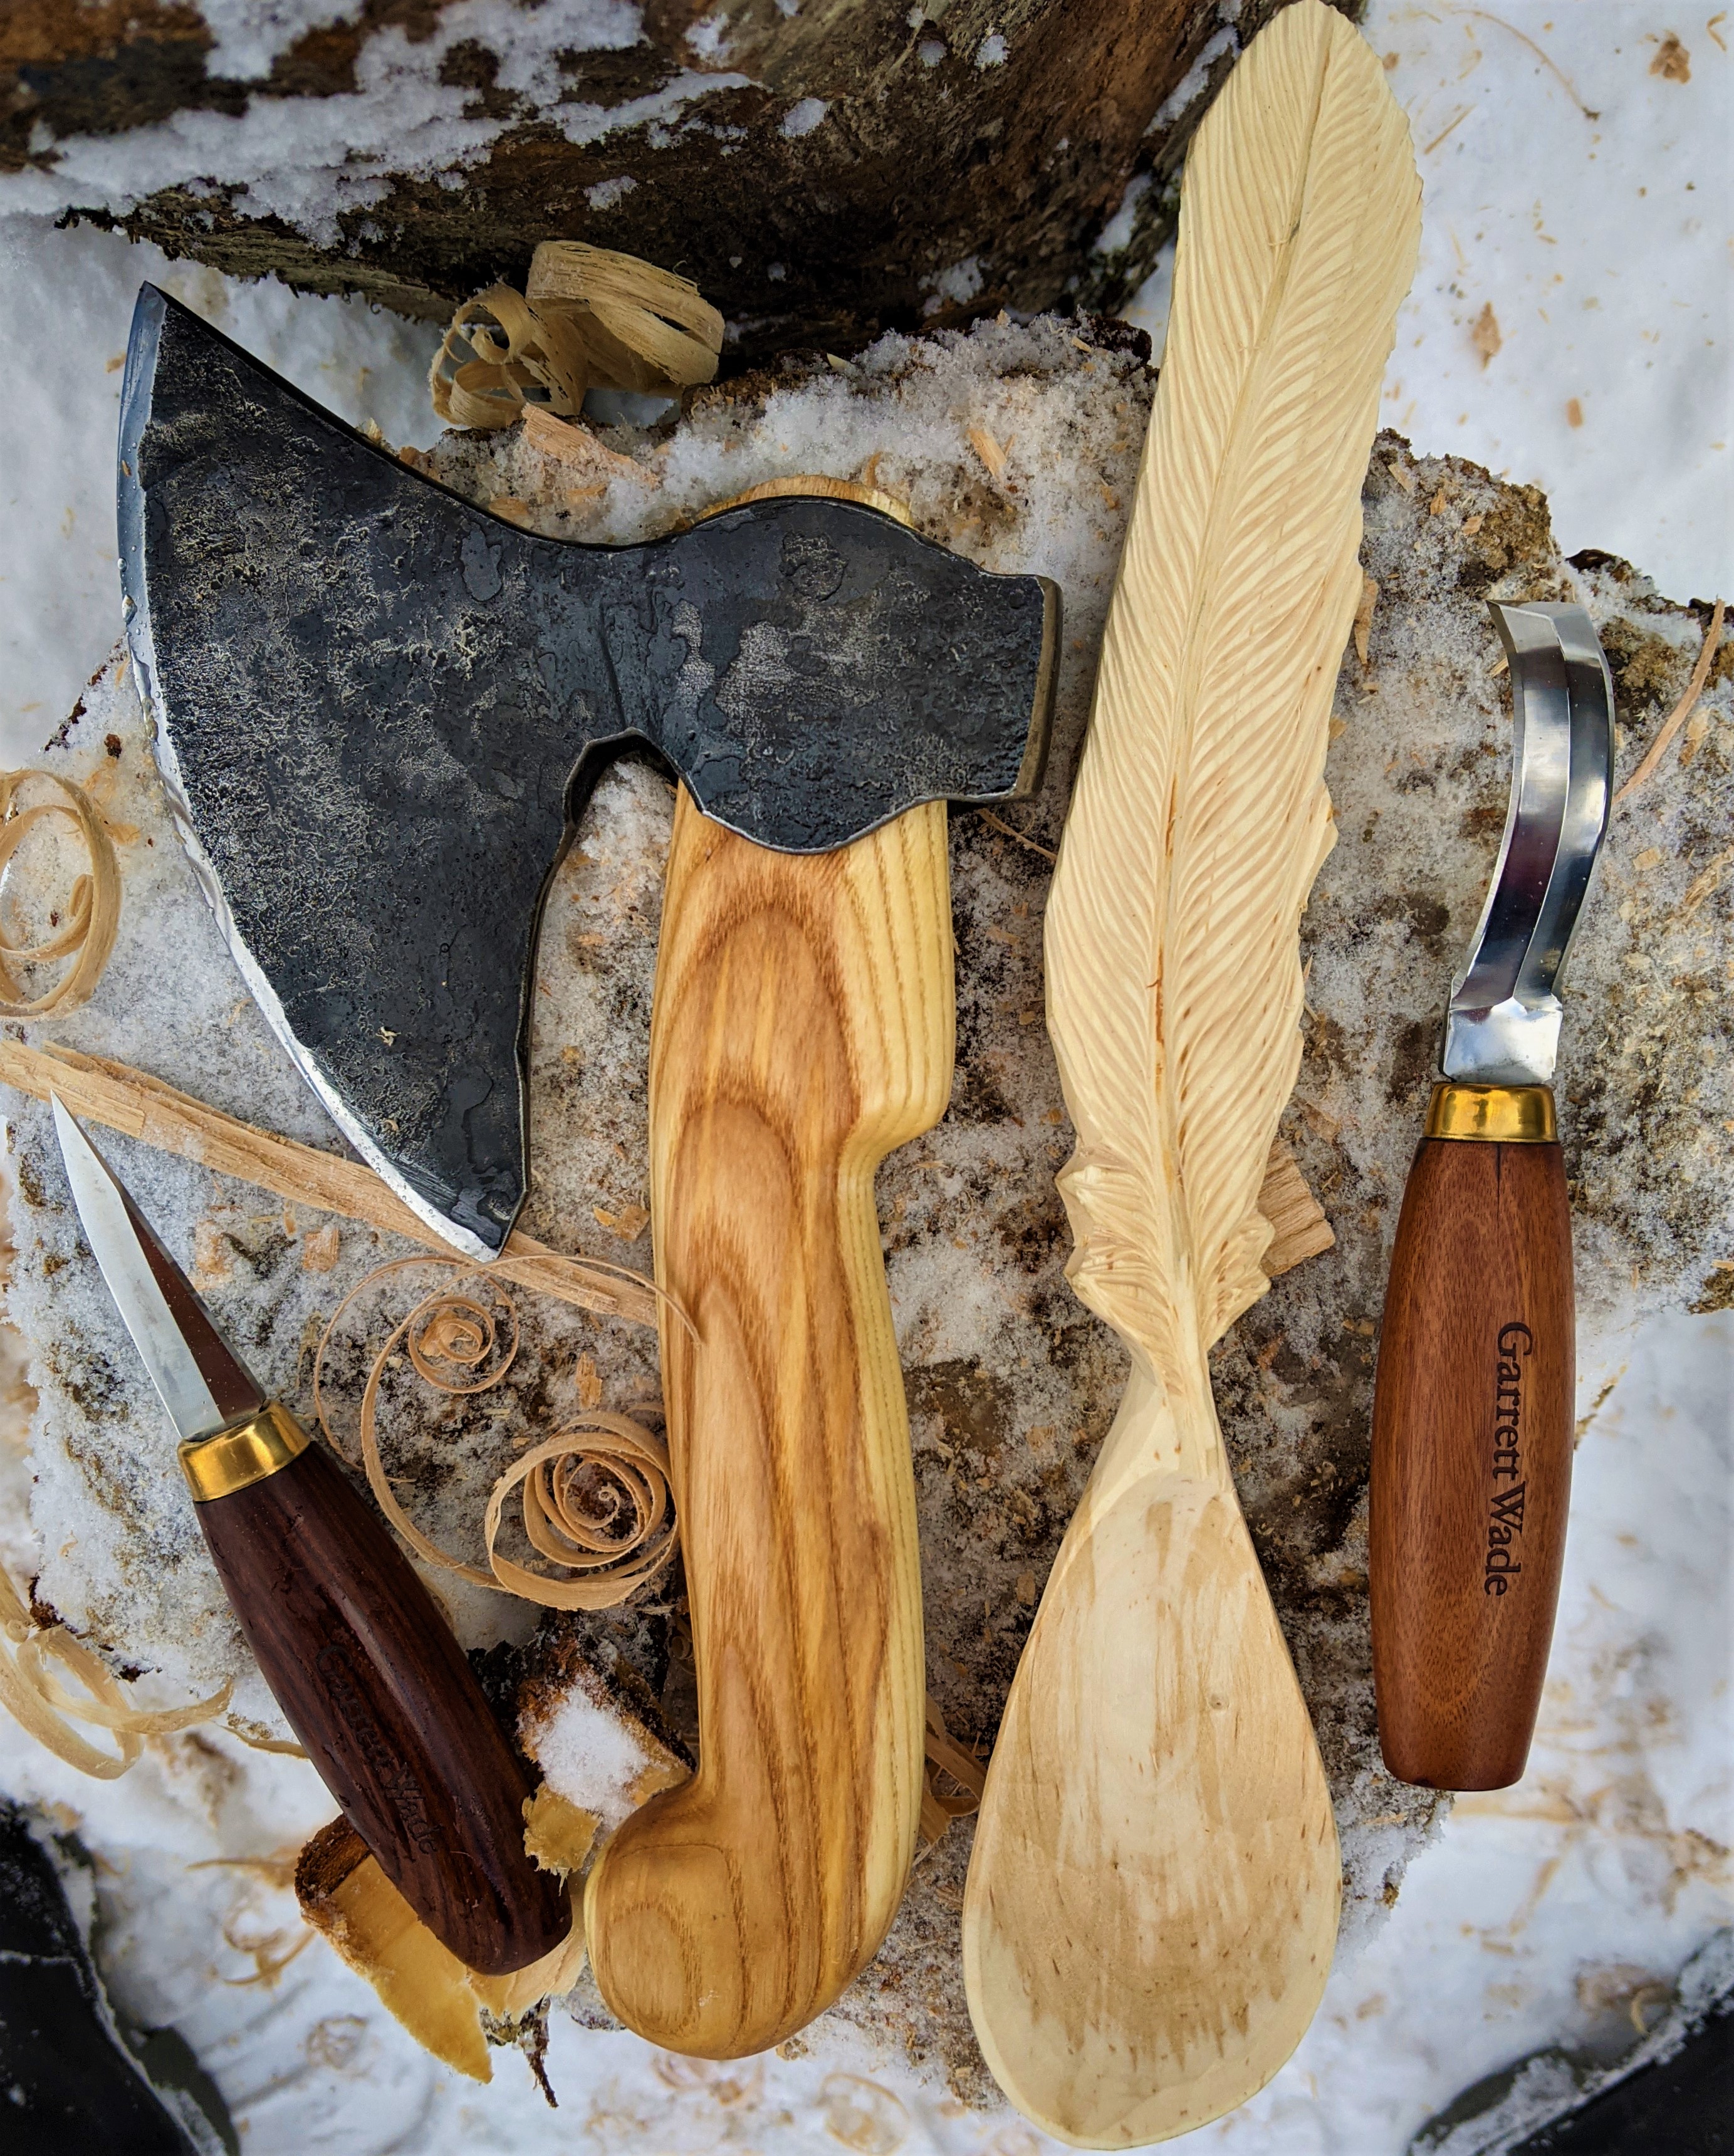 Garrett Wade Spoon Carving Tools  Spoon carving tools, Carving tools,  Woodworking